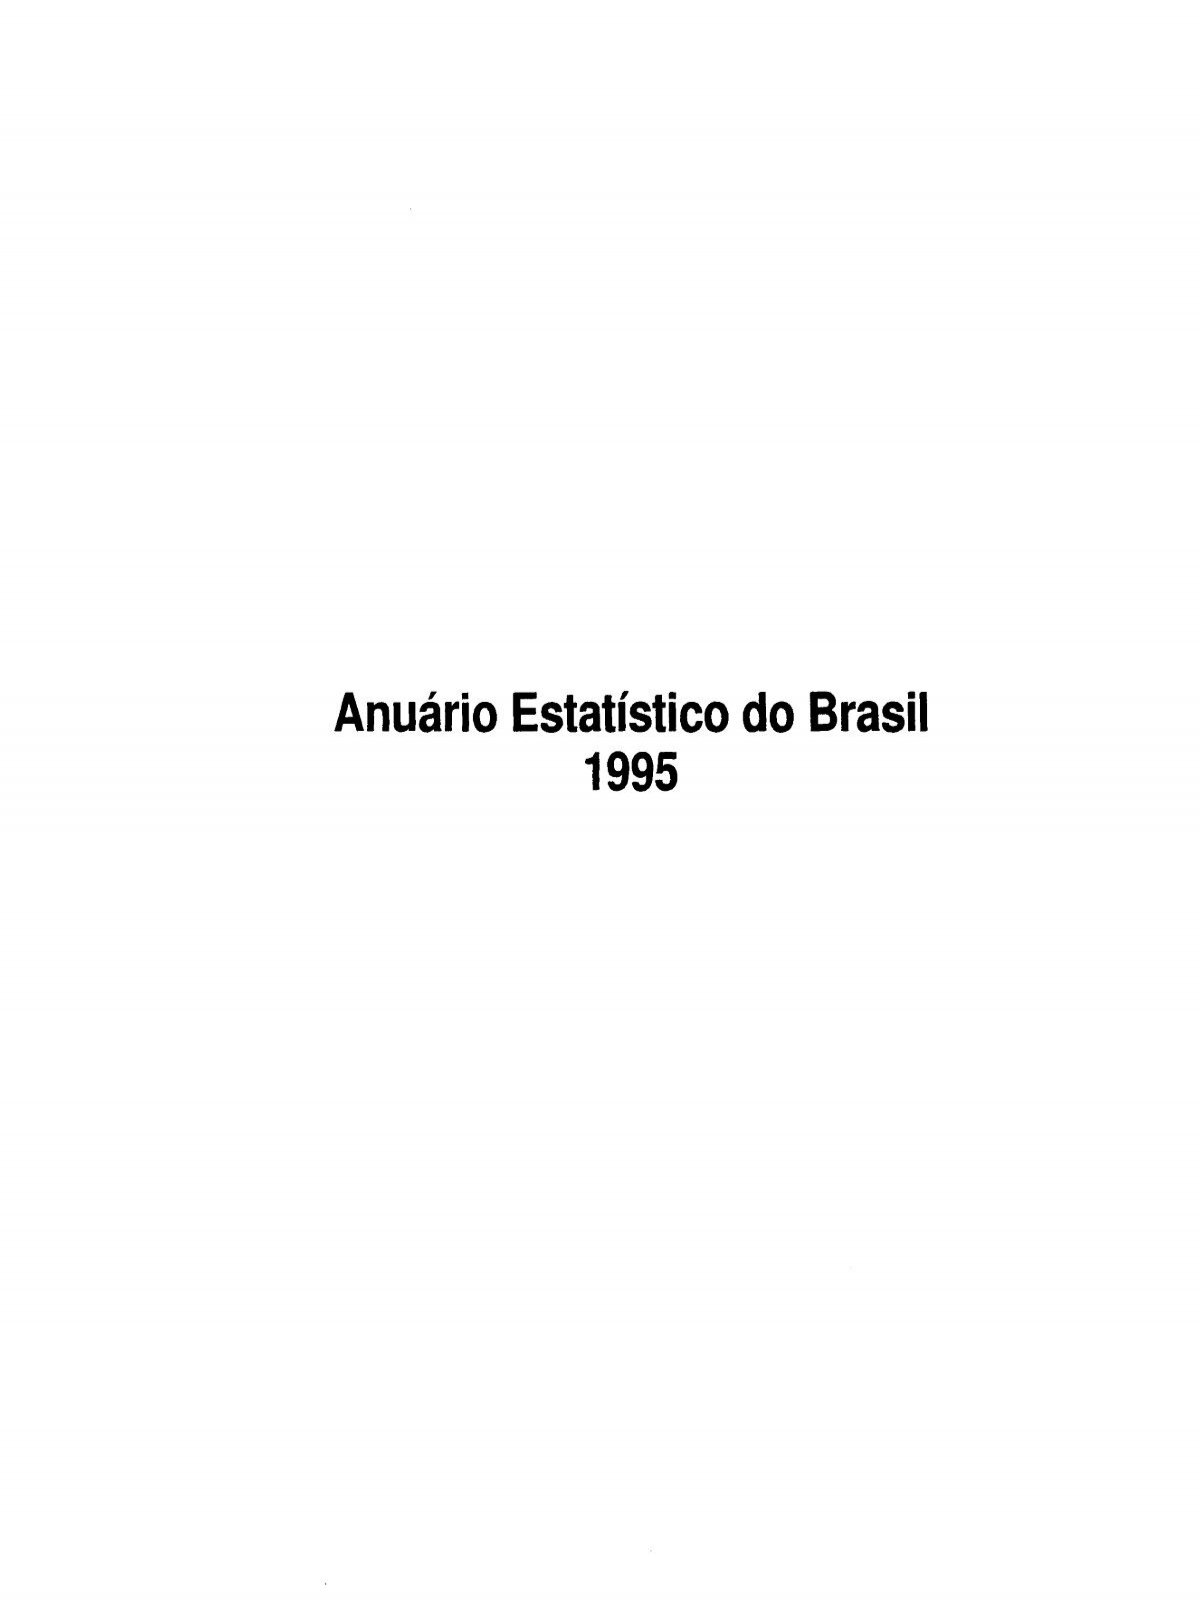 Brazil Yearbook - 1995_ocr